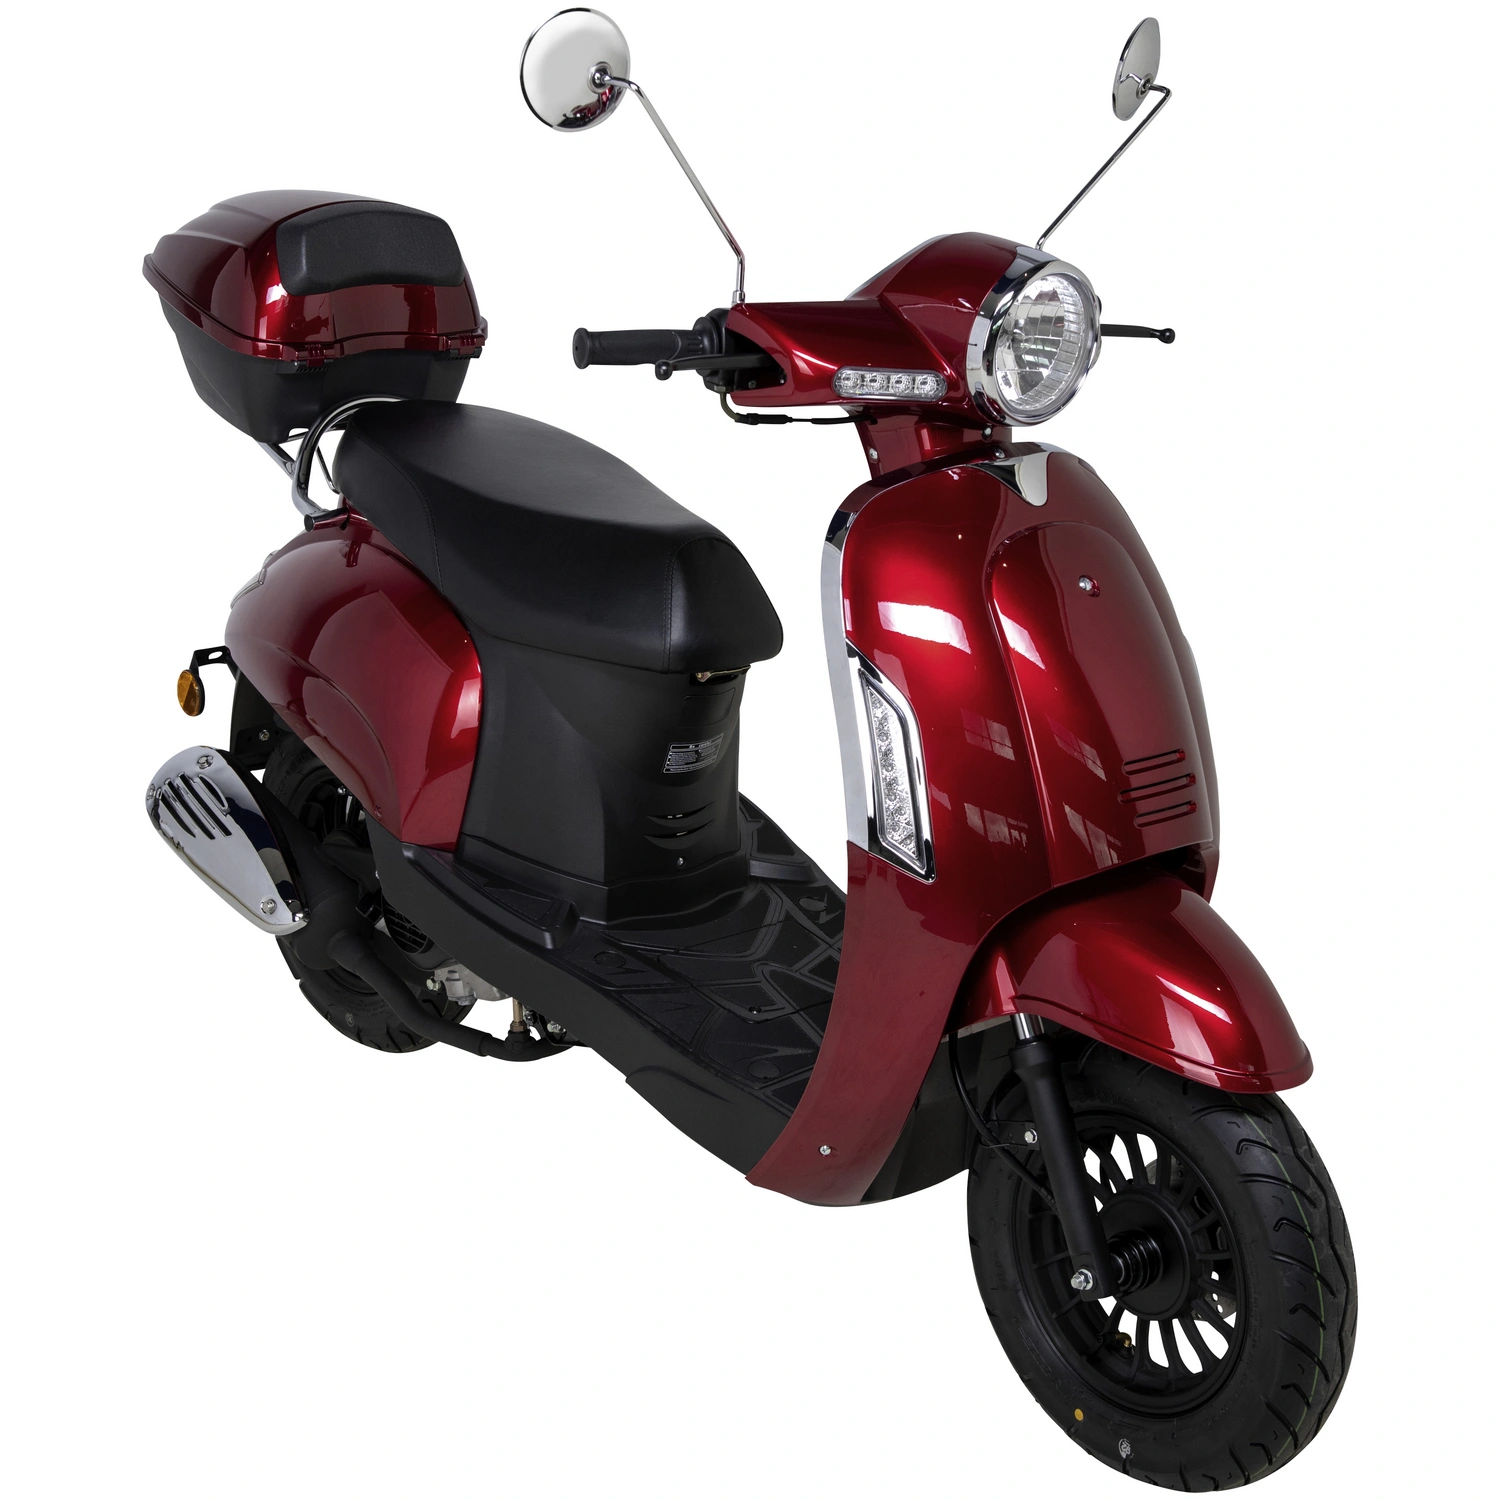 GT UNION Motorroller »Massimo«, 50 cm³, 45 km/h, Euro 5